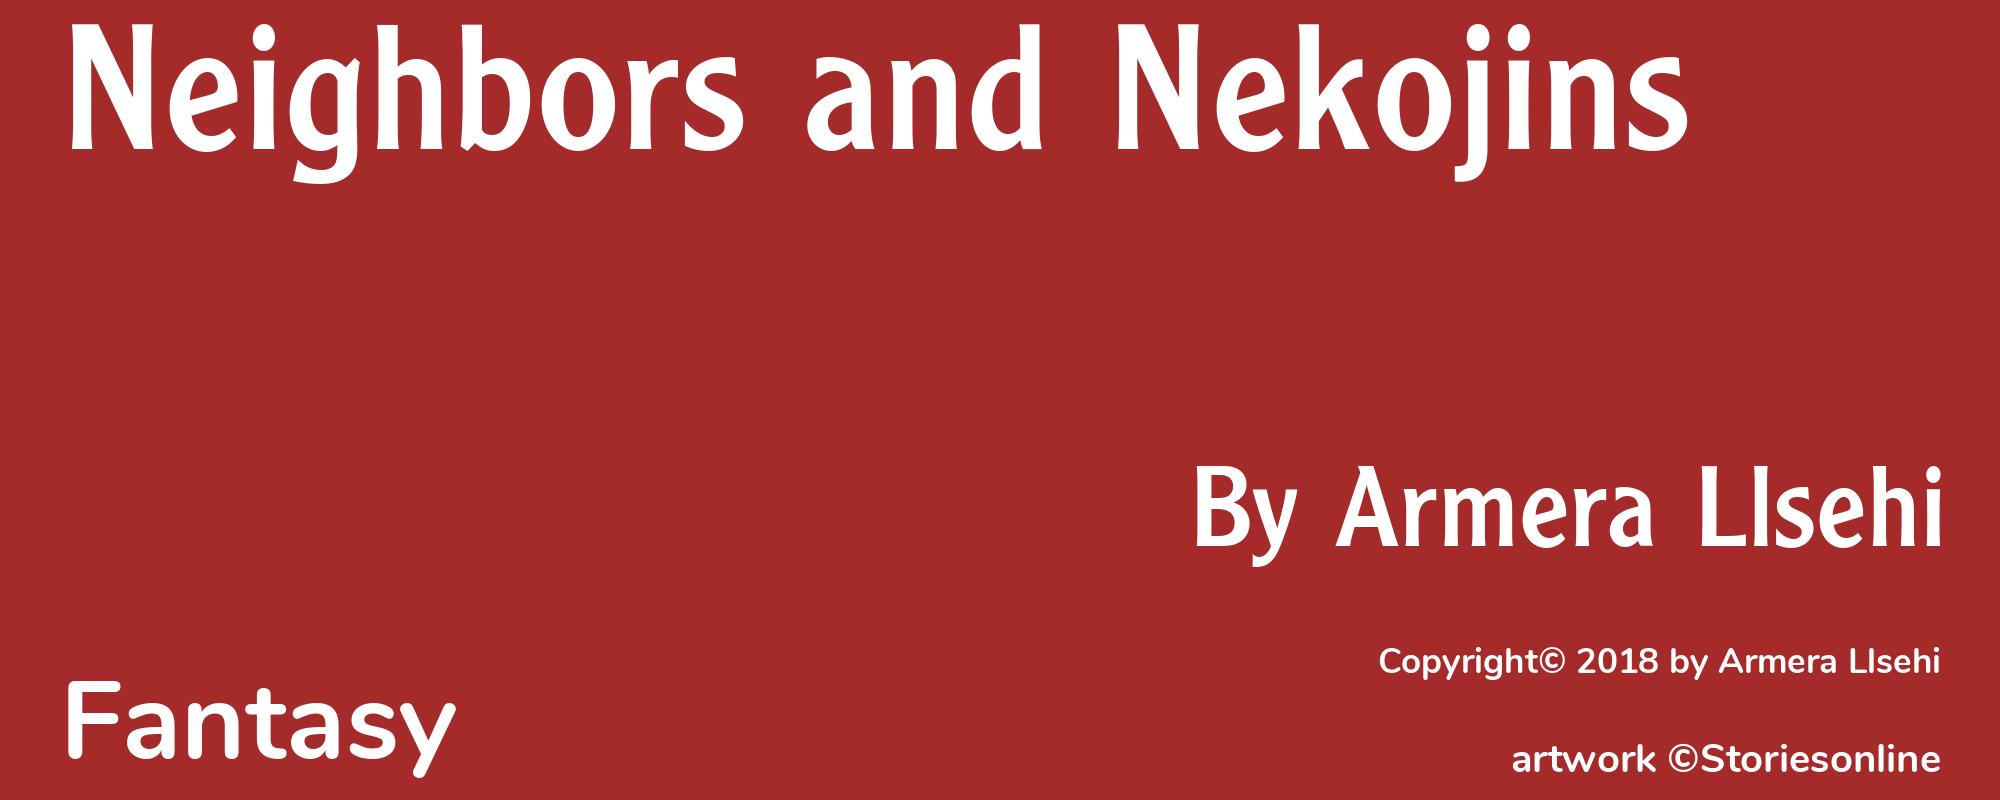 Neighbors and Nekojins - Cover